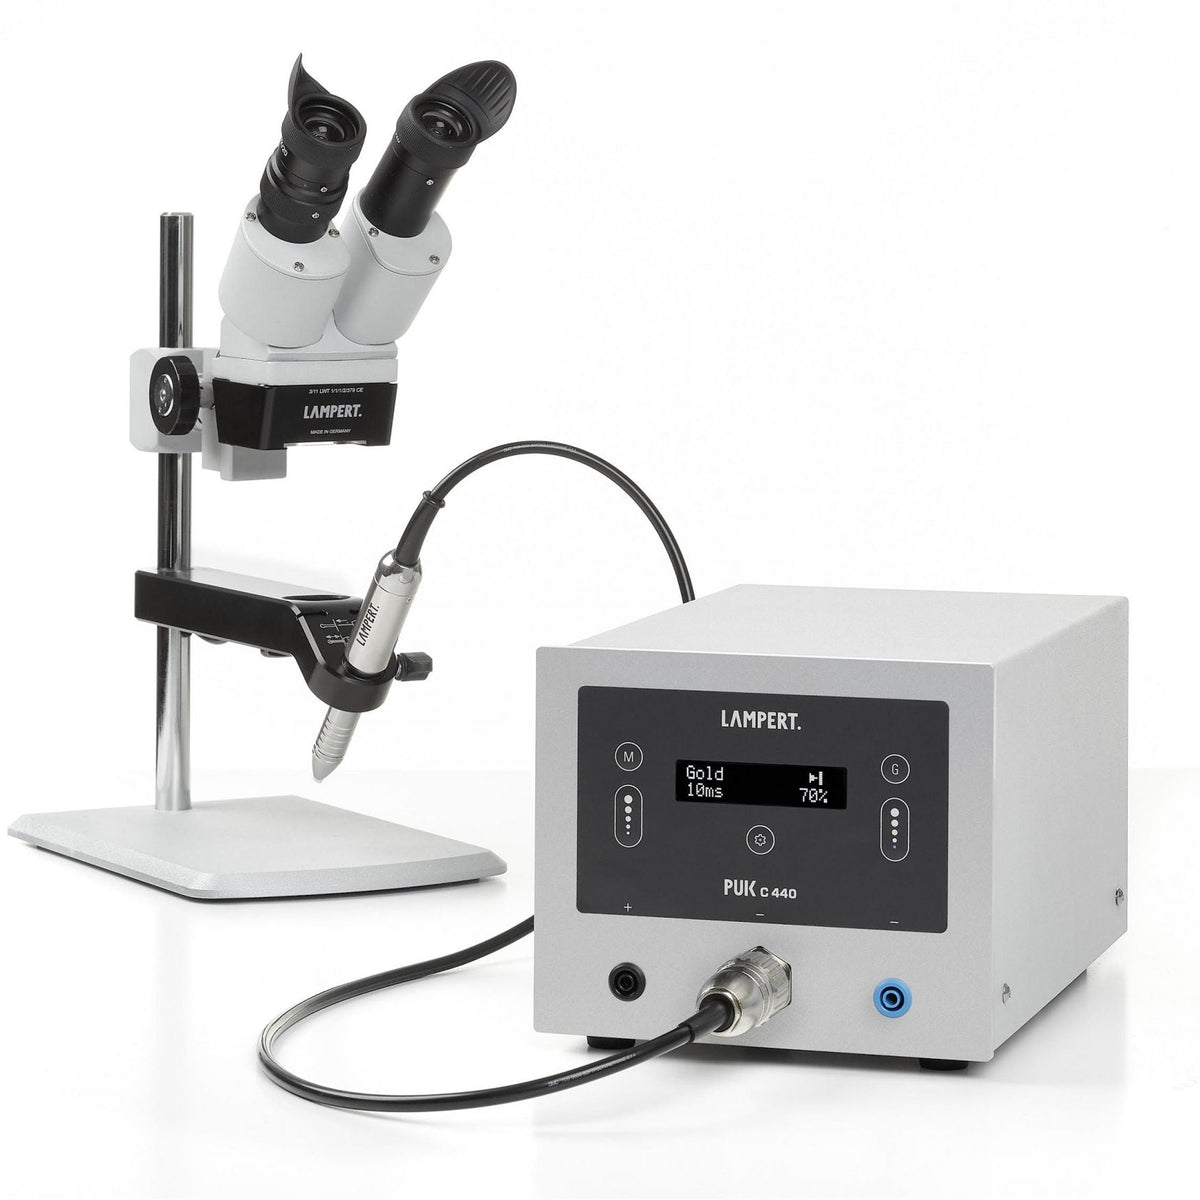 PUK C440 with SM3 Microscope and Argon Regulator